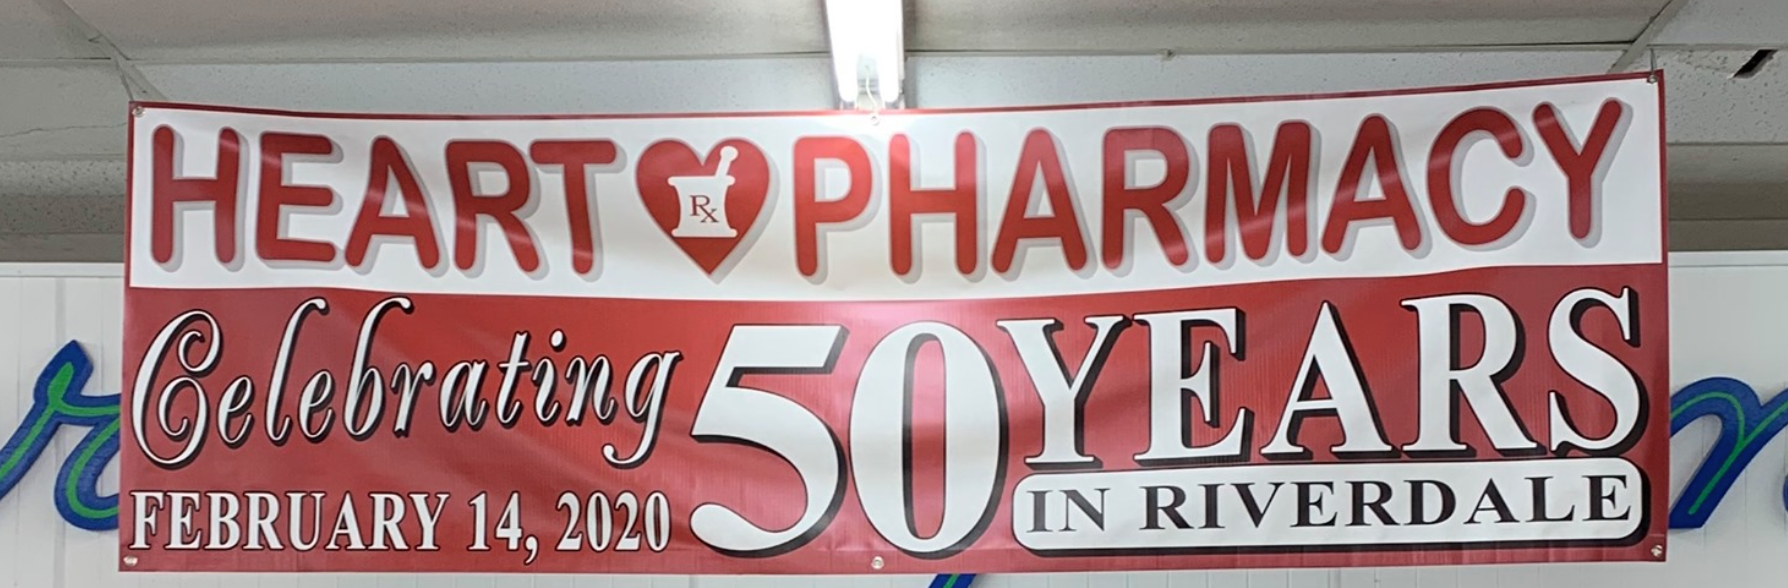 Welcome to Heart Pharmacy